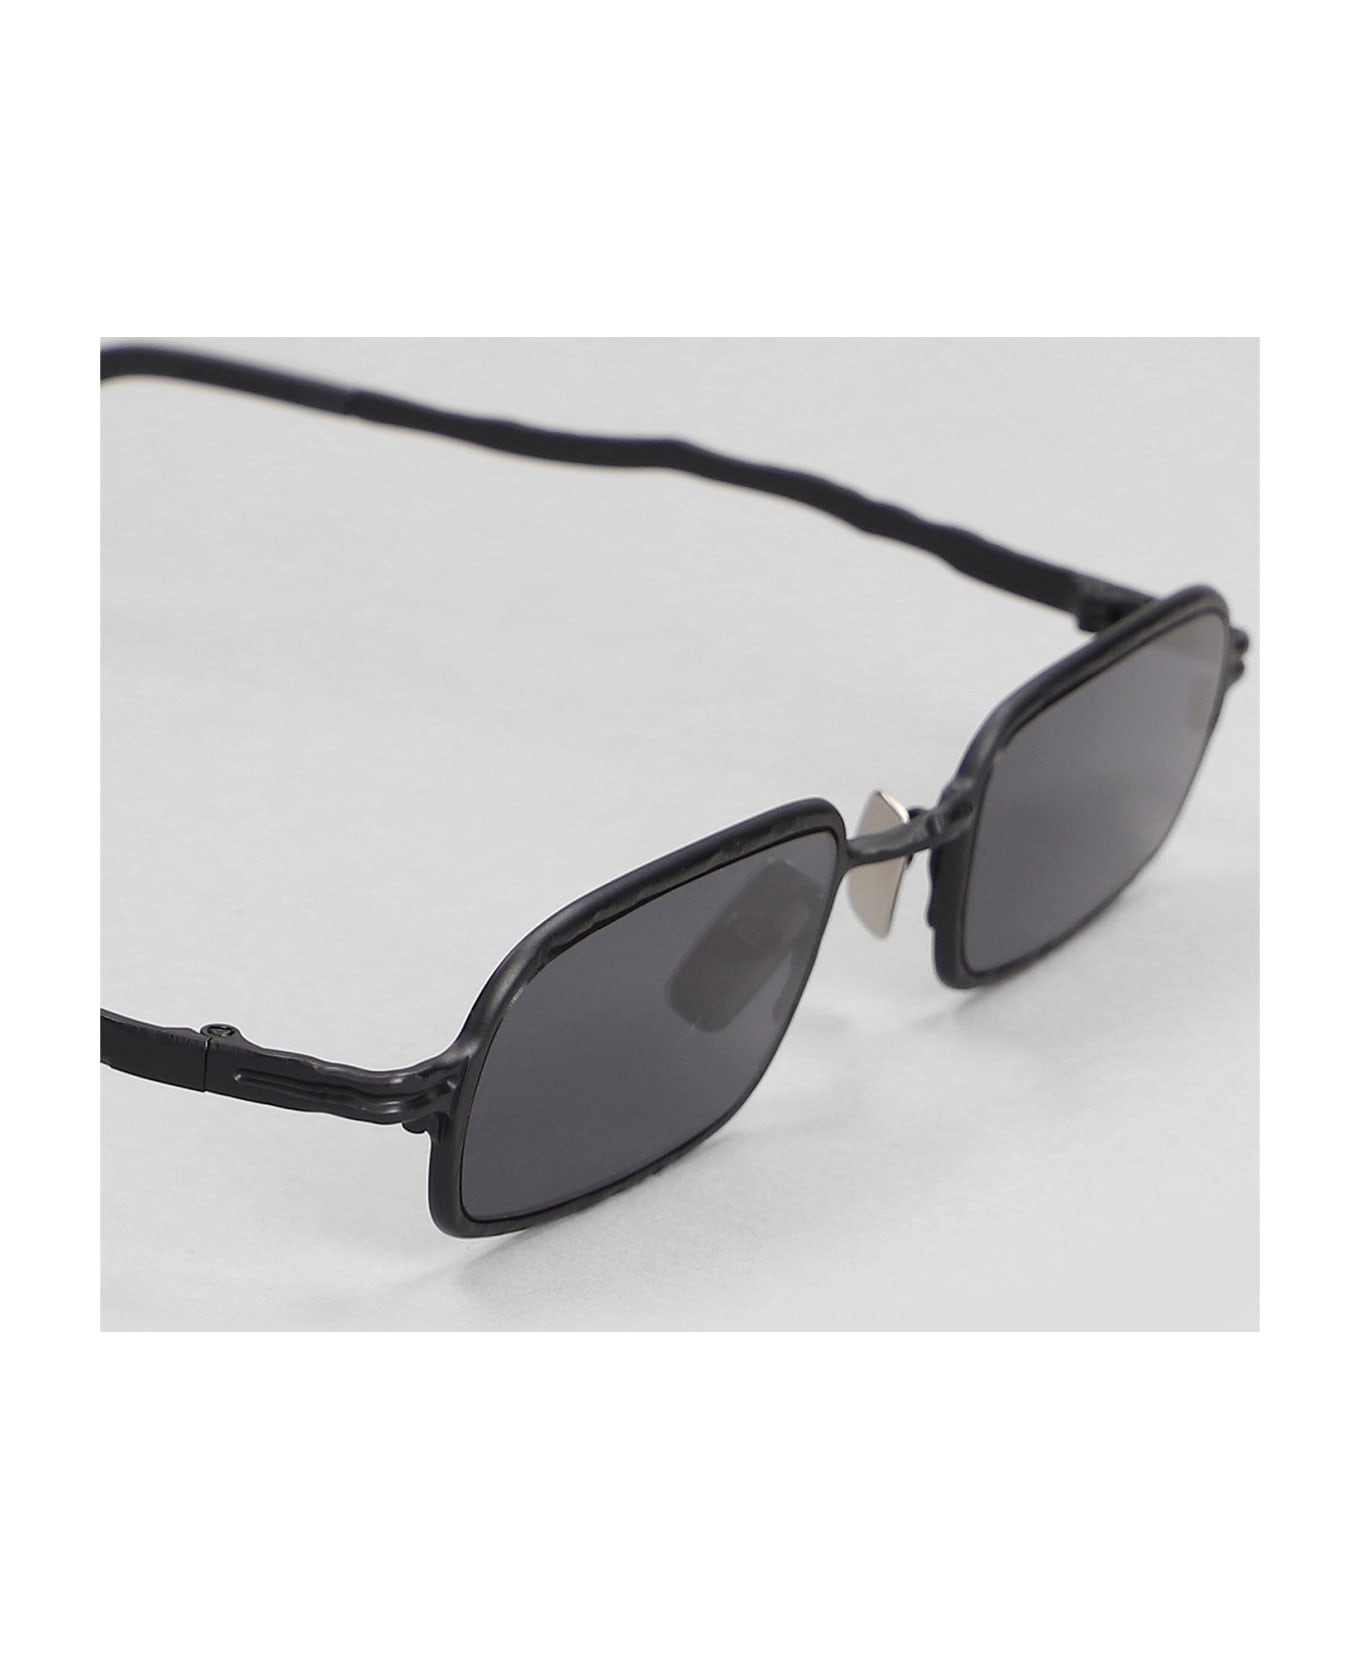 Kuboraum Z18 Sunglasses In Black Metal Alloy - black